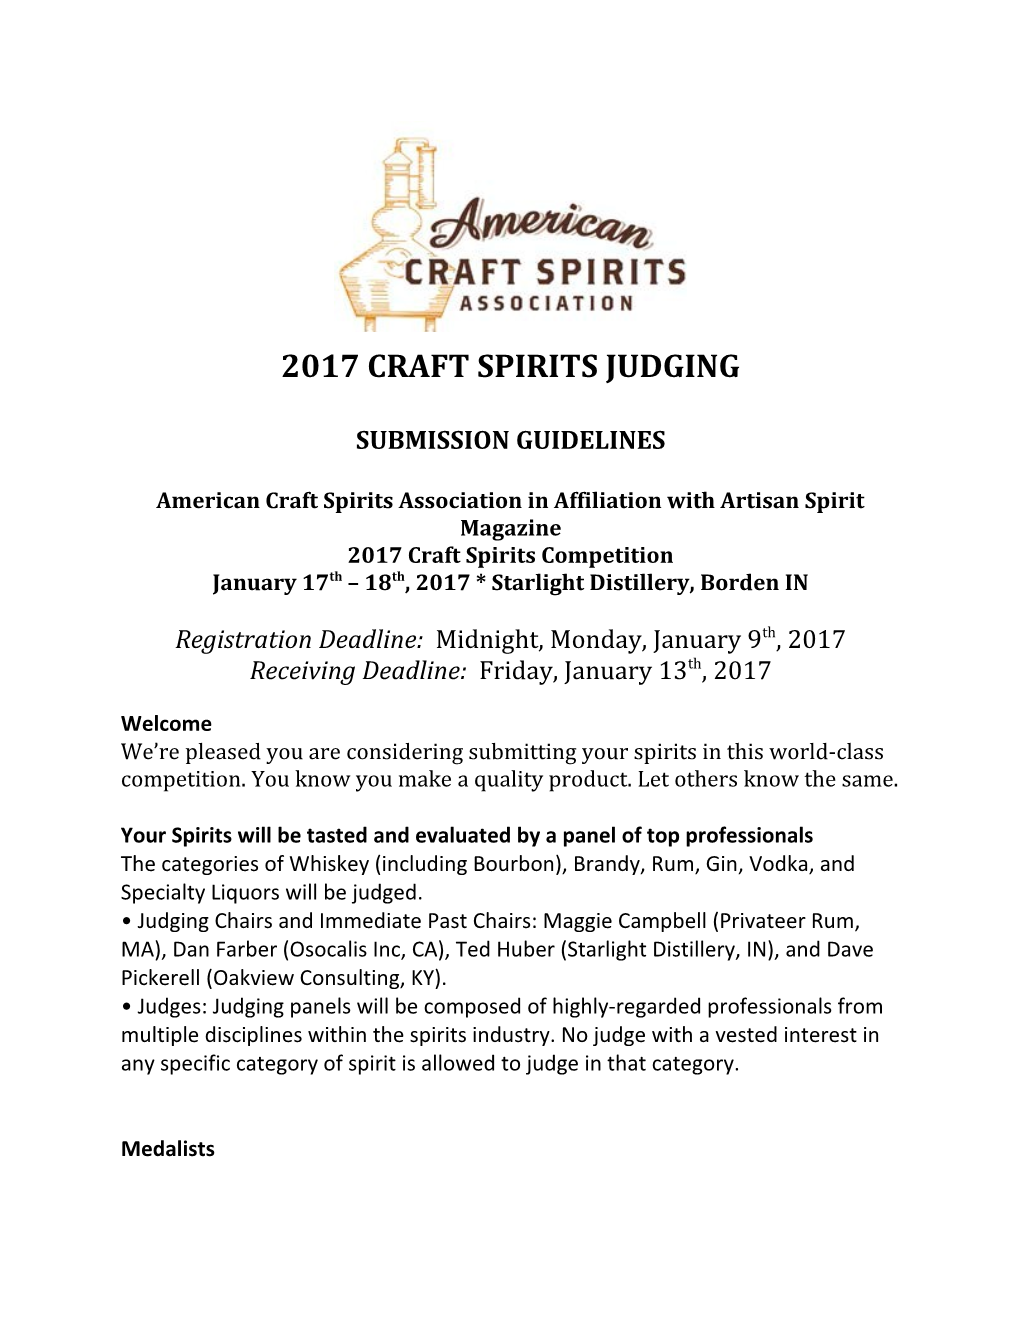 American Craft Spirits Association in Affiliation with Artisan Spirit Magazine